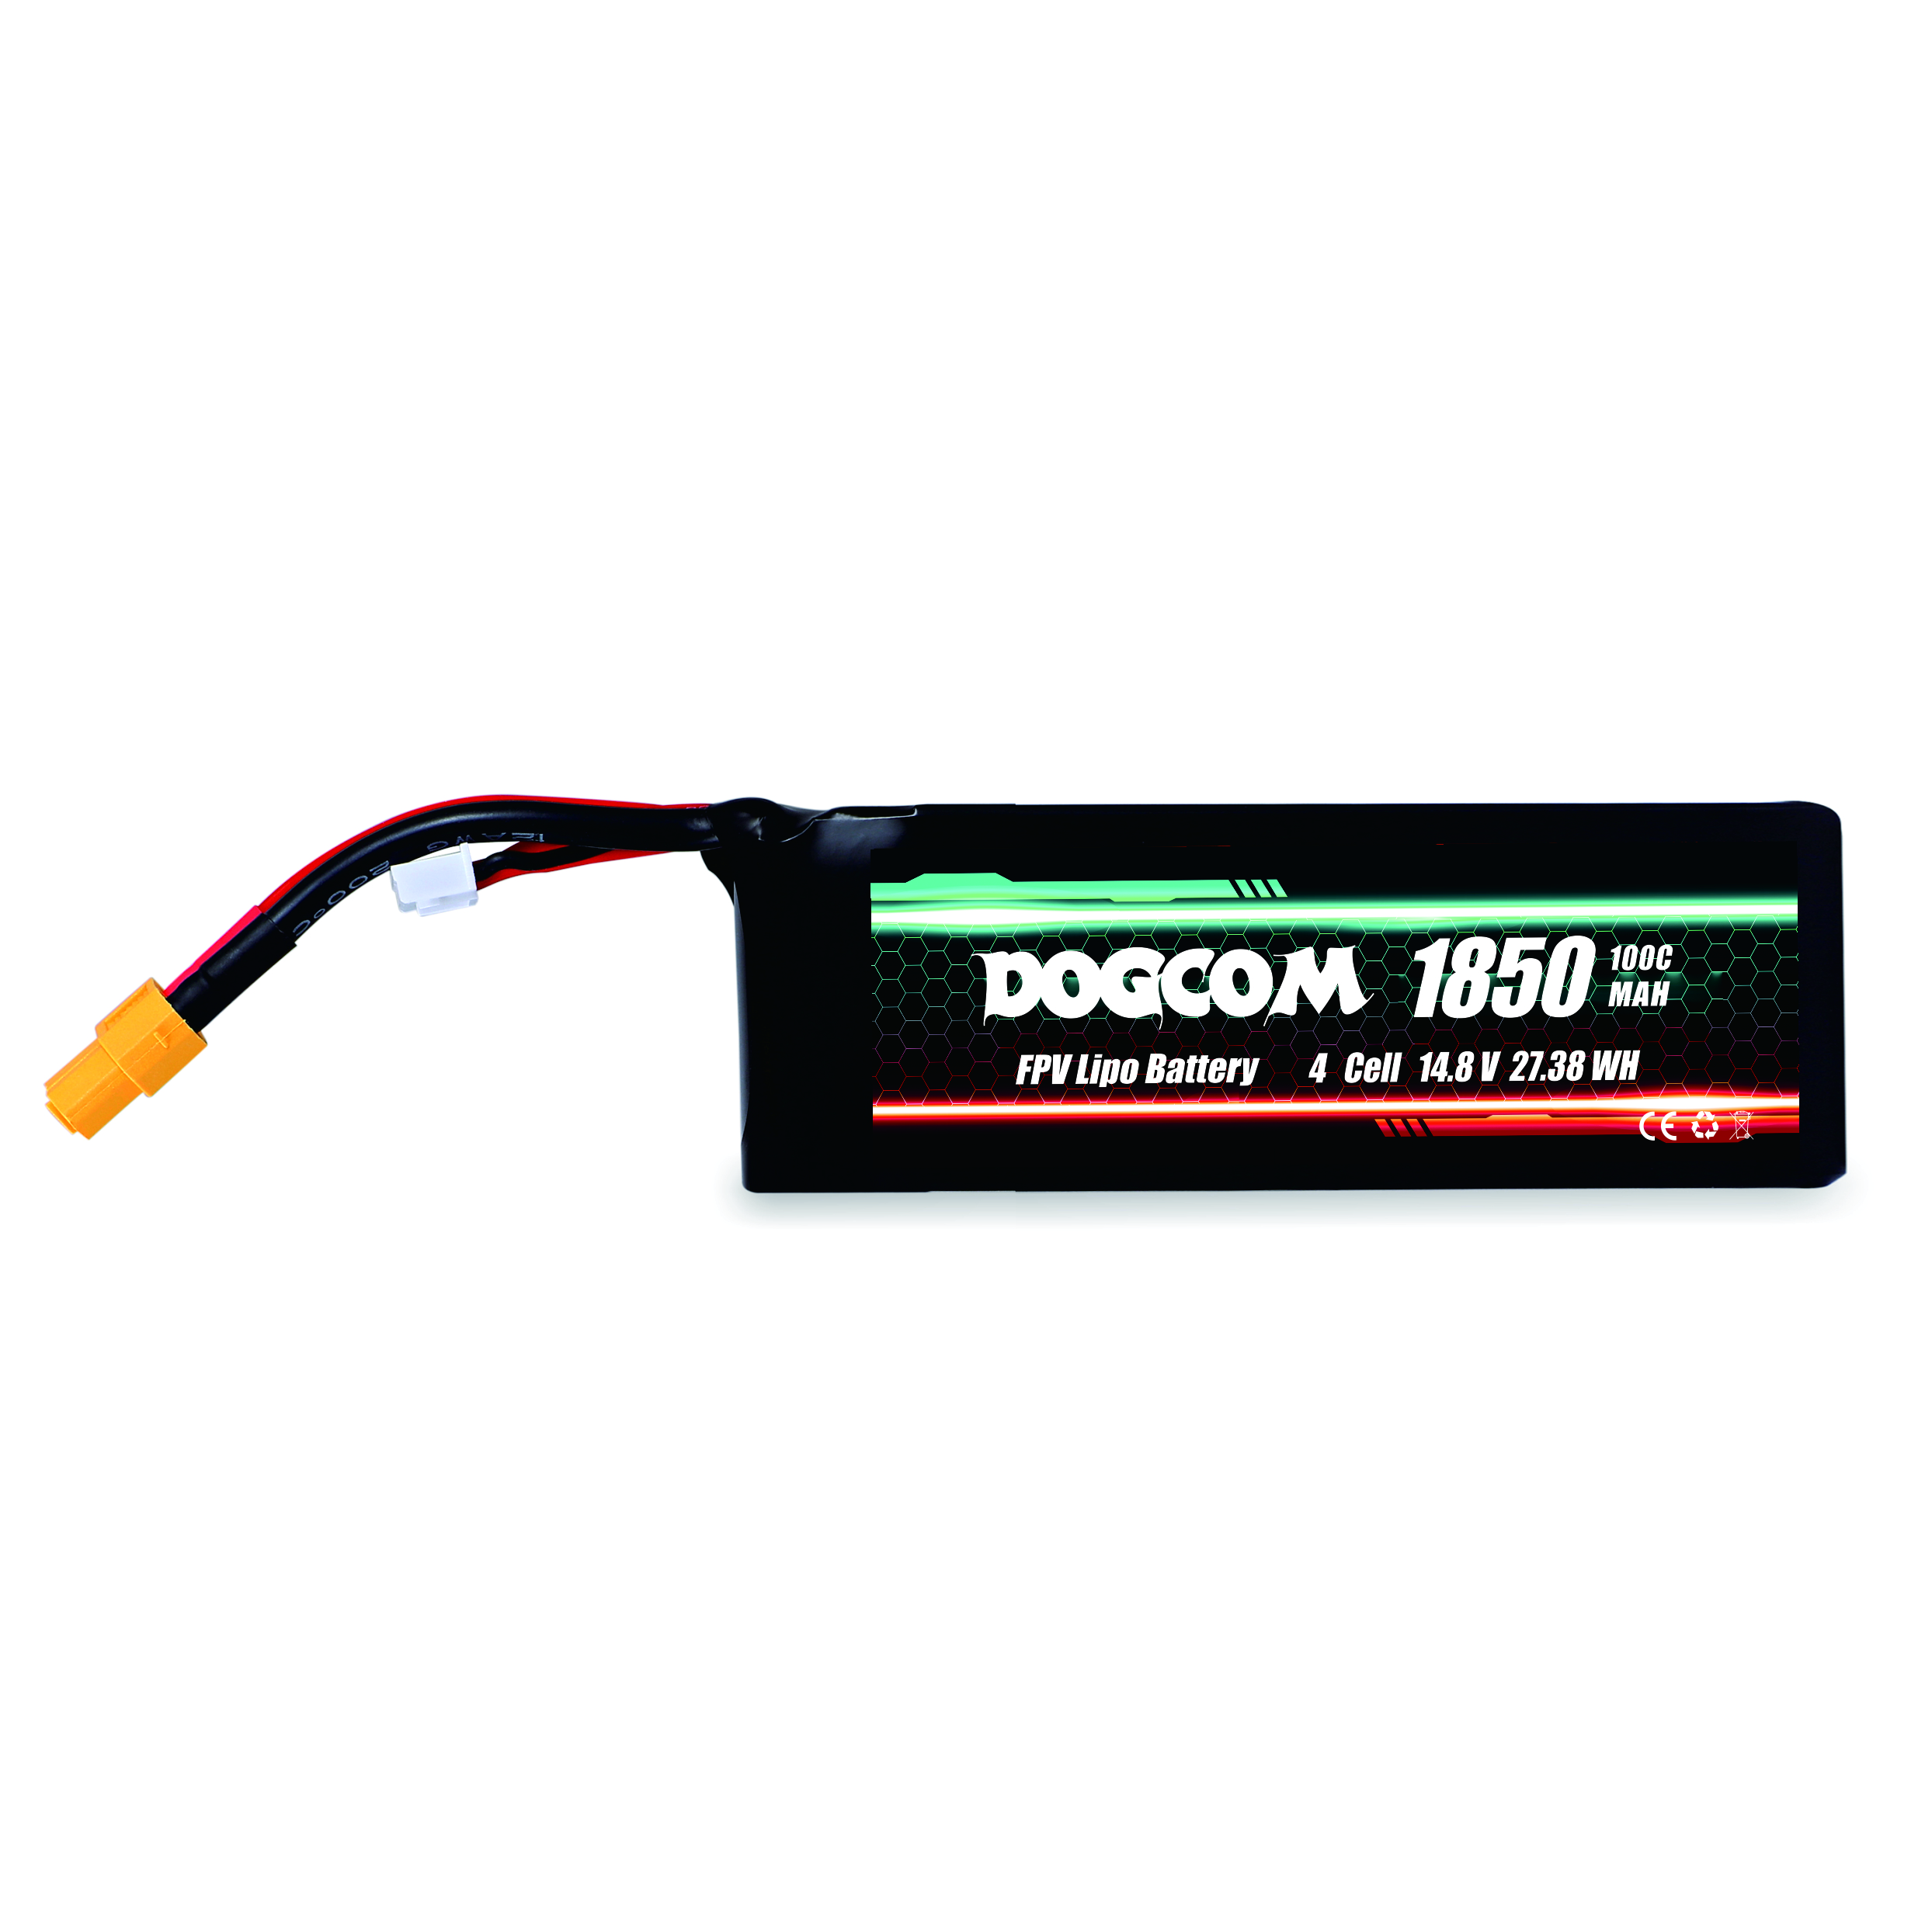 1850mAh 100C 4S 14.8V FPV drone DOGCOM battery